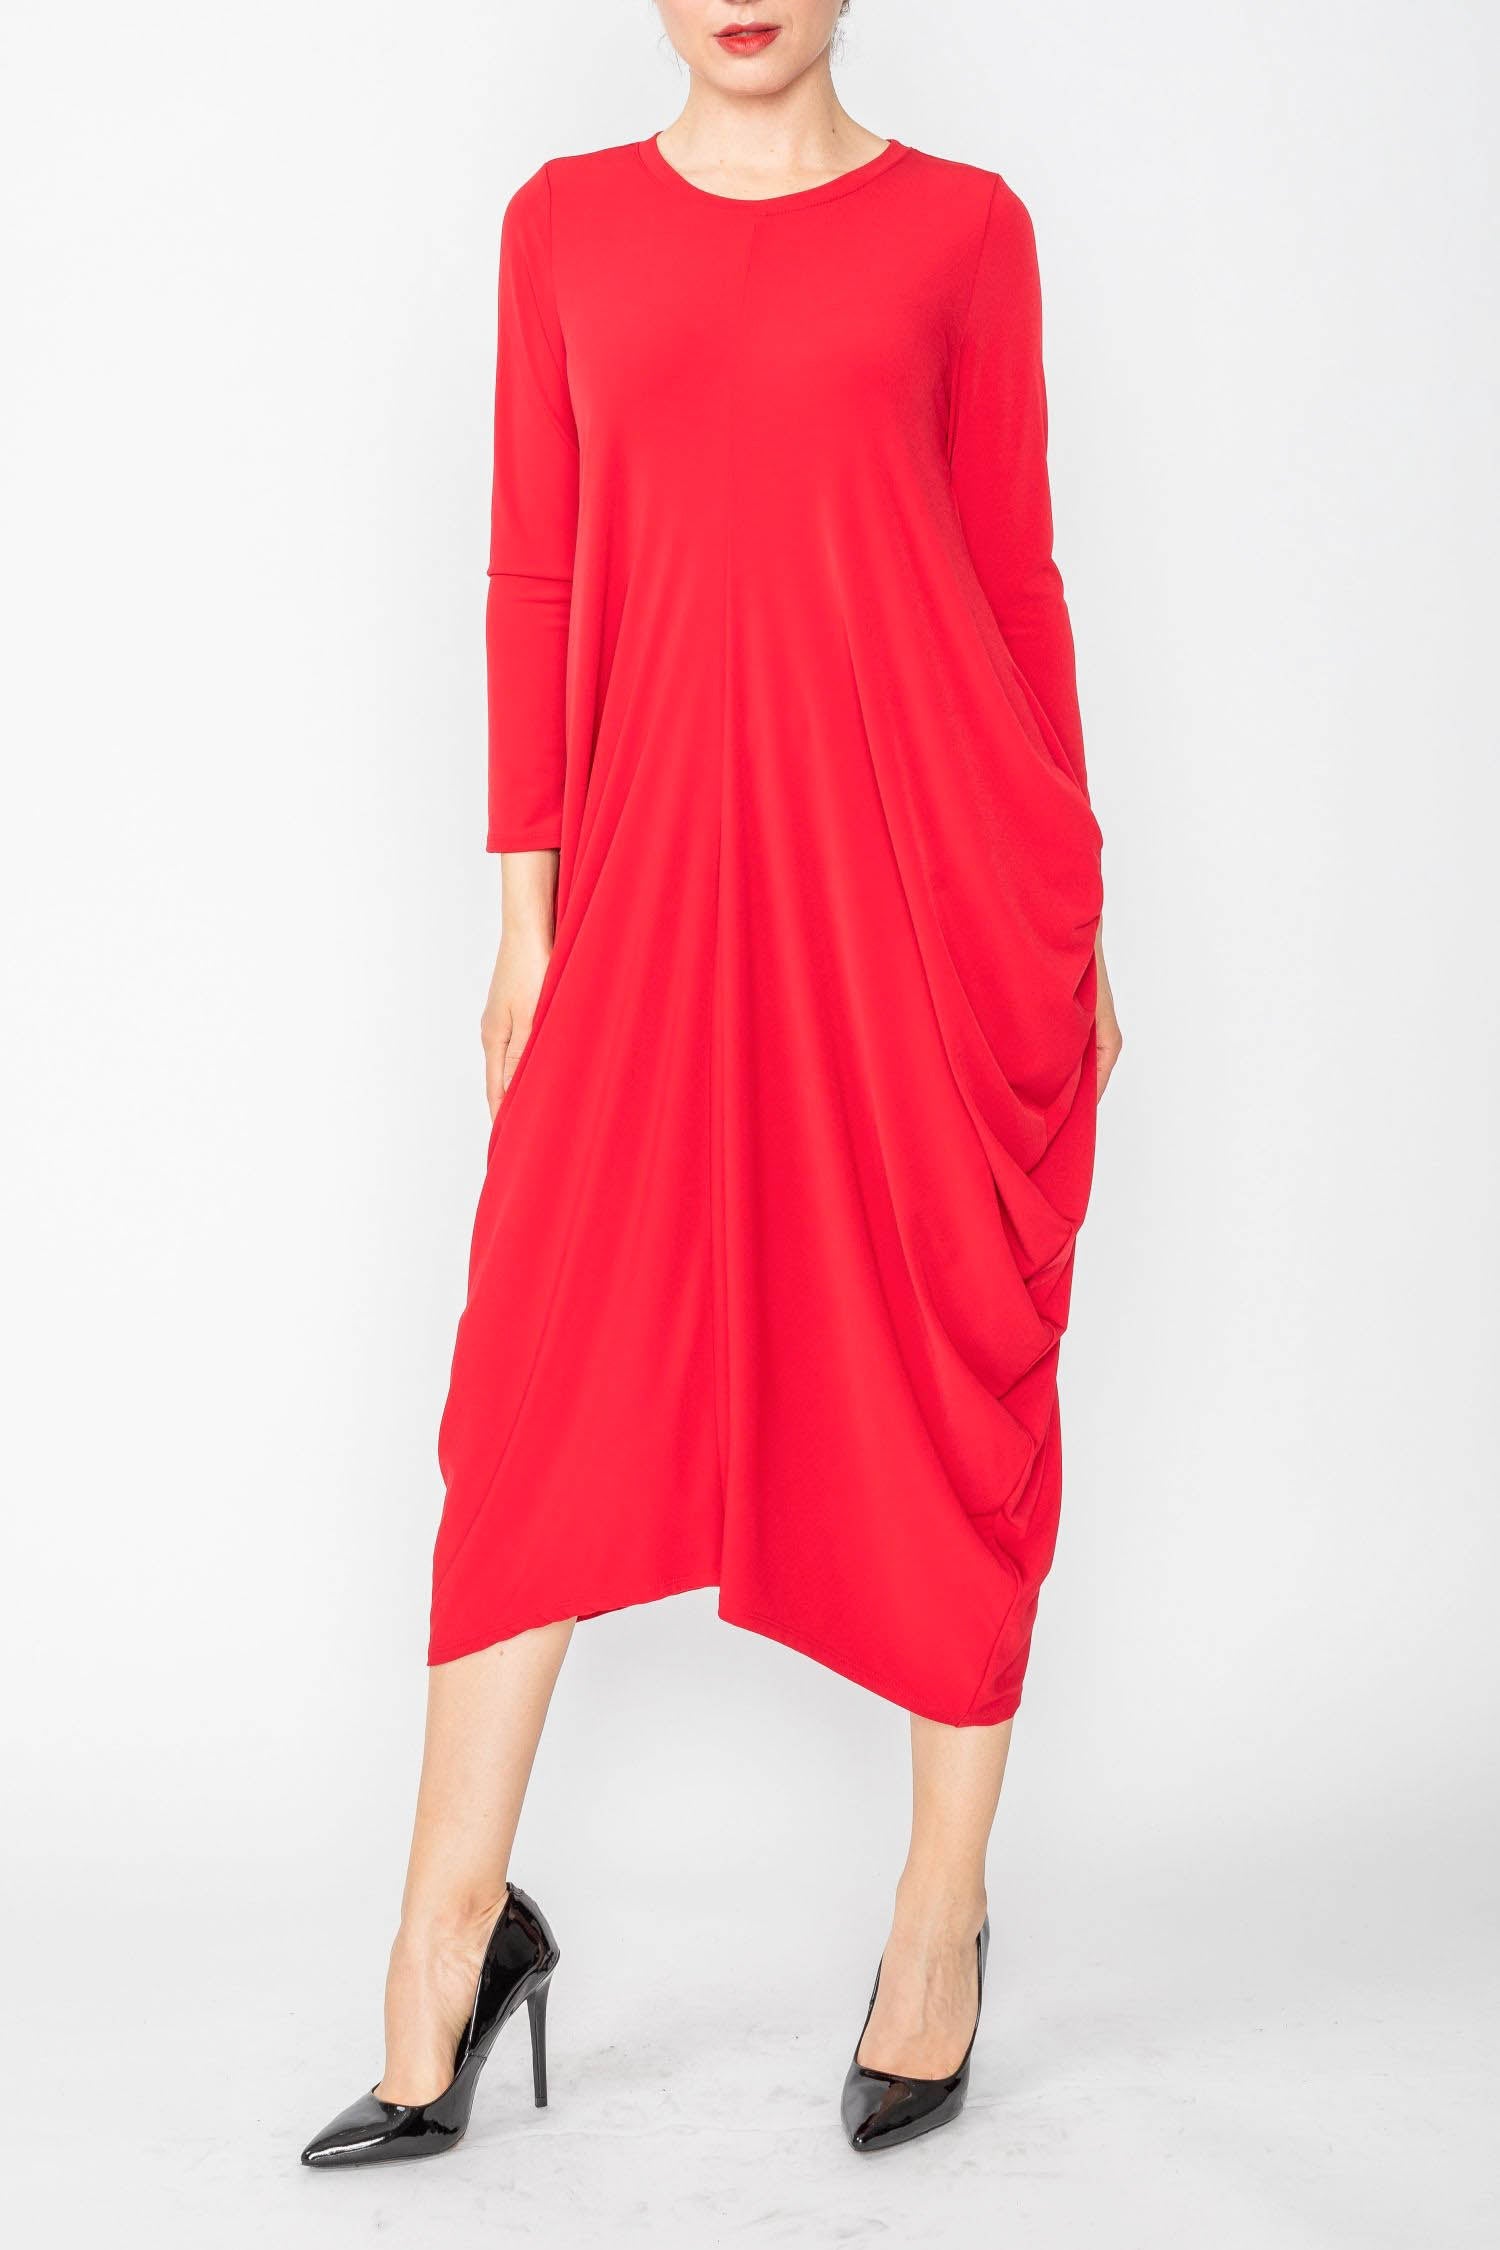 Red Draped Side Long Sleeve Dress